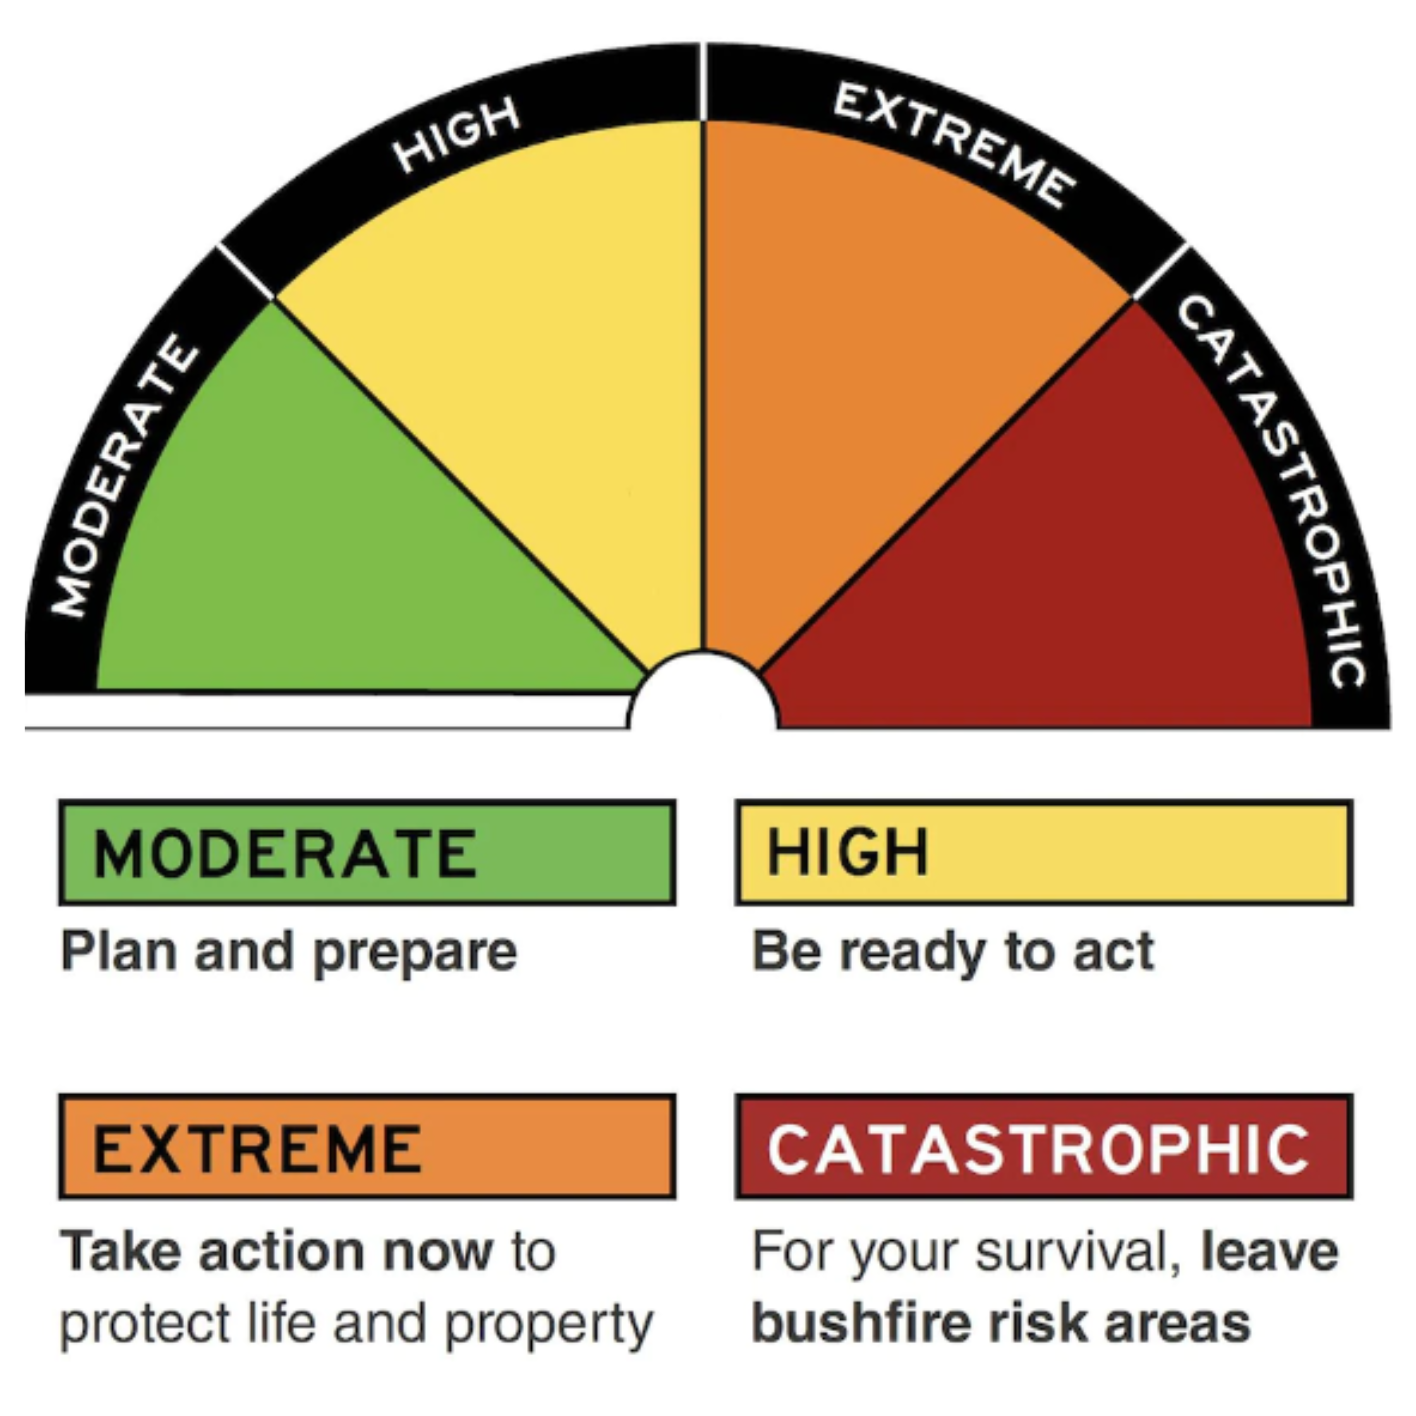 Steps to preparedness for bushfire season